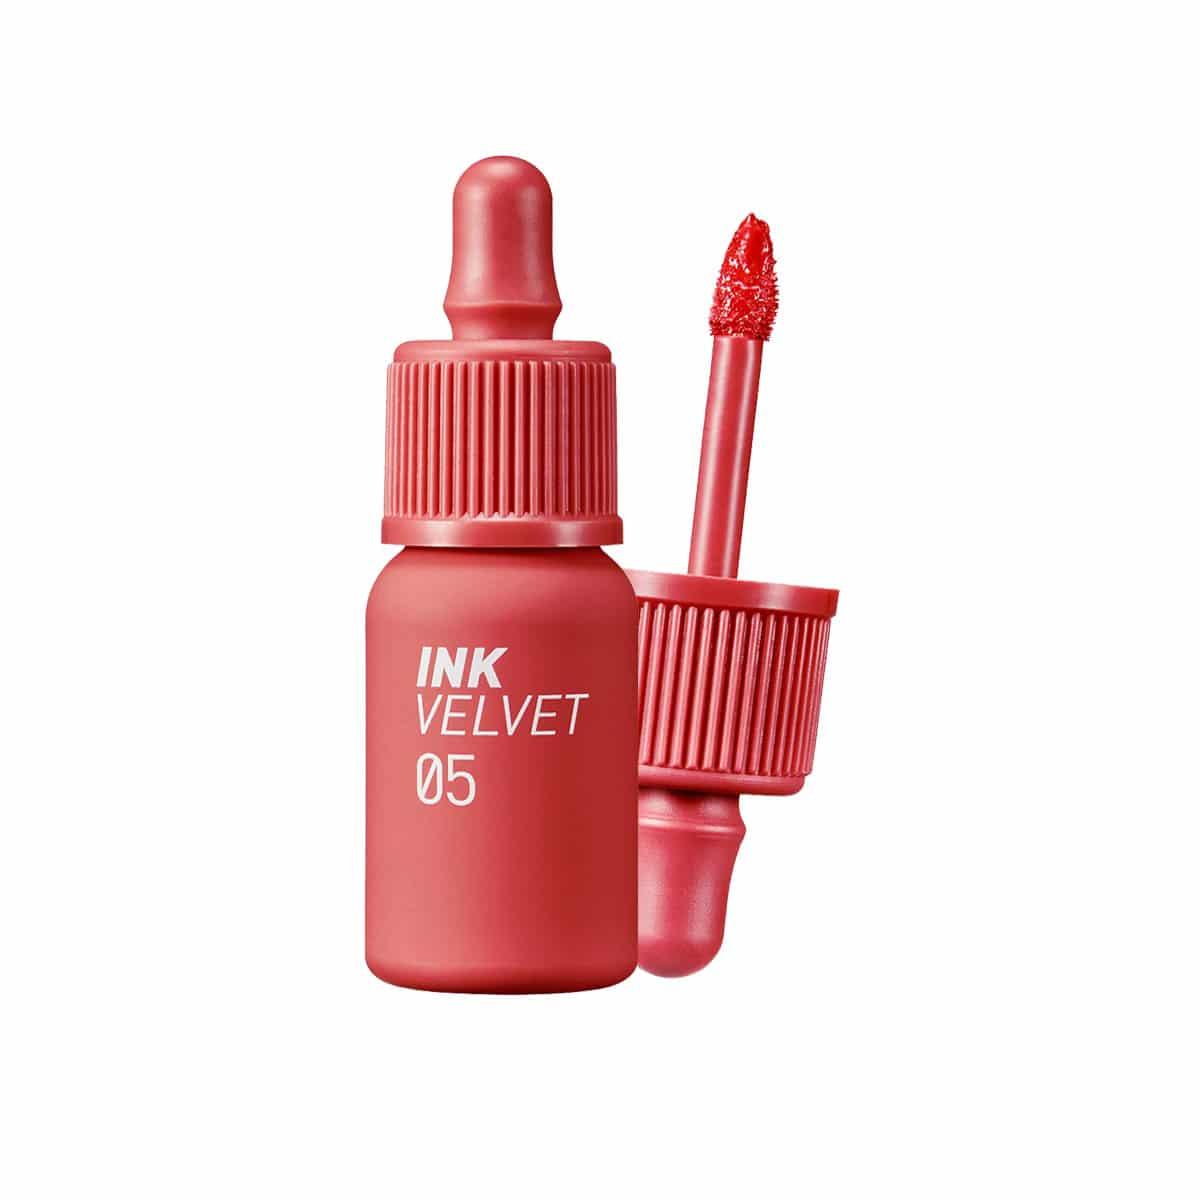 INK VELVET #05 CORAL FICIAL - Arumi Korean Cosmetics